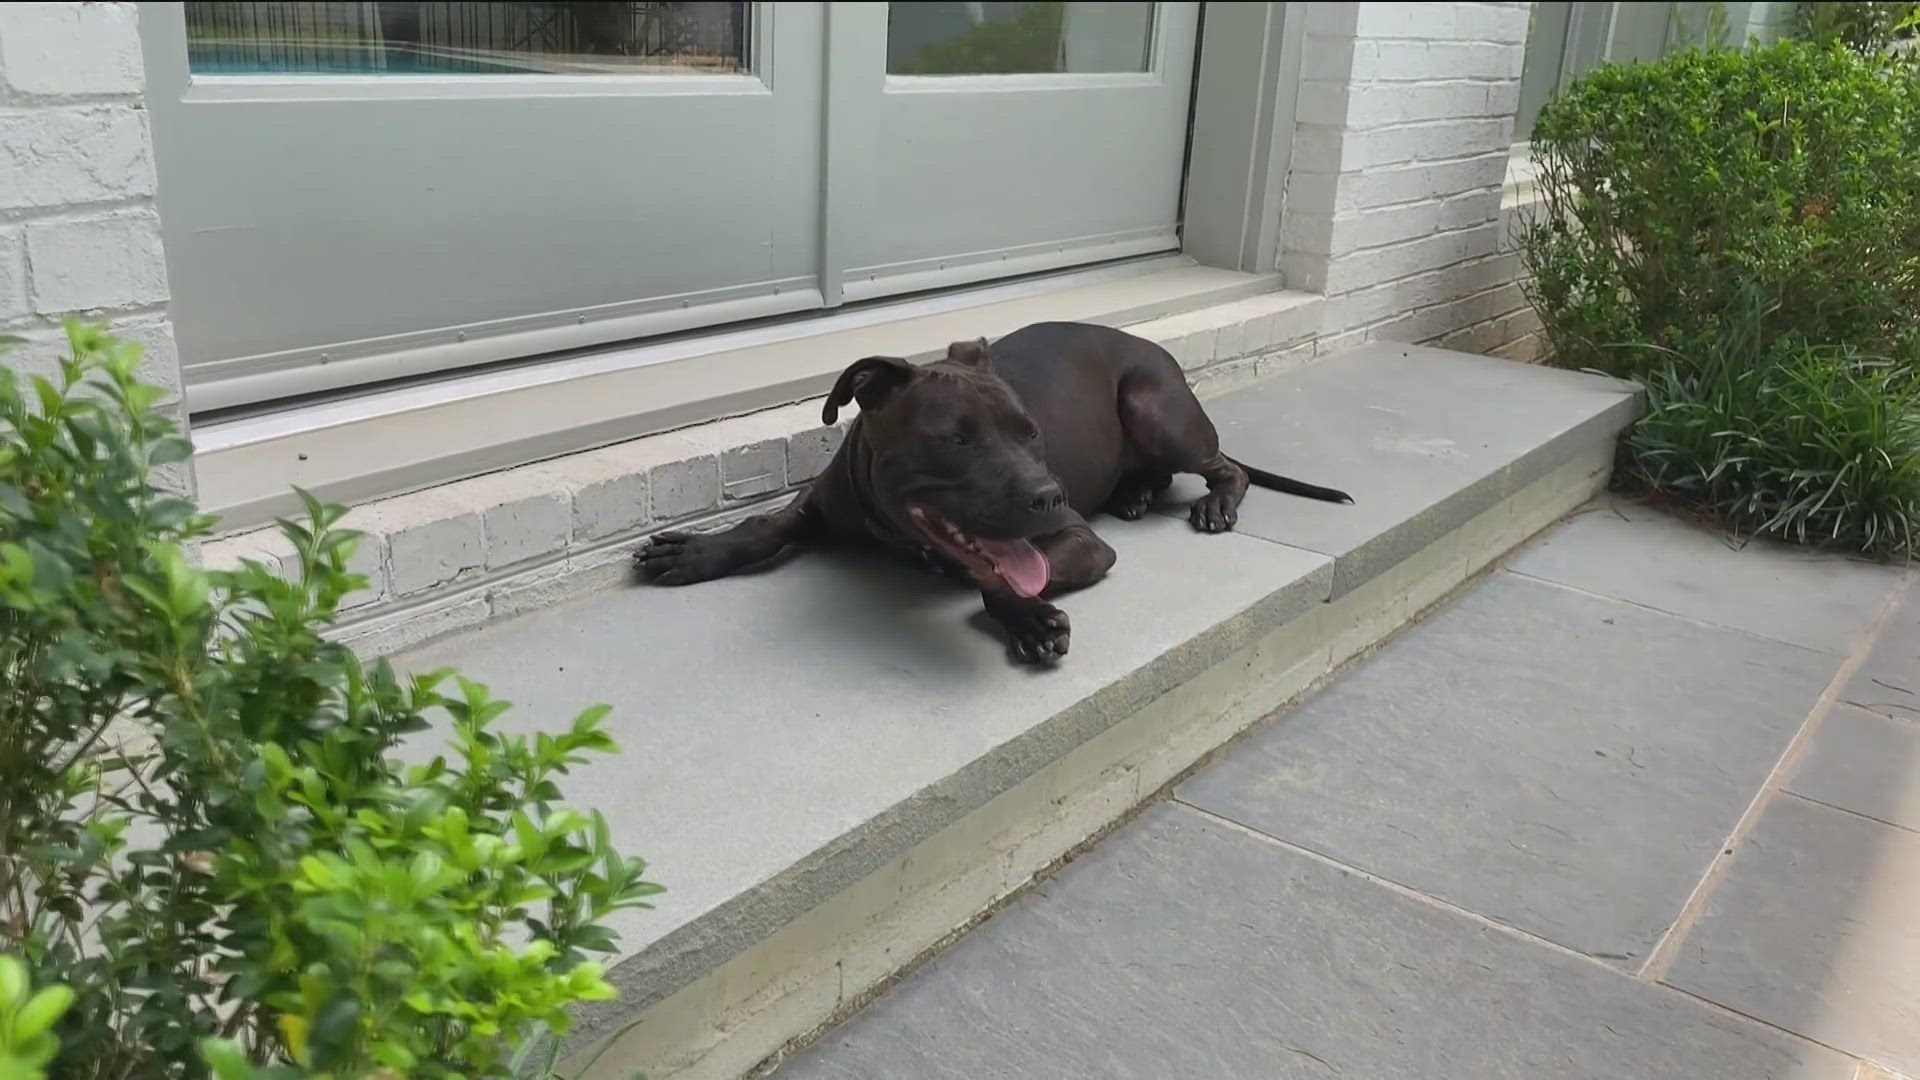 Braveheart is up for adoption at the Atlanta Humane Society